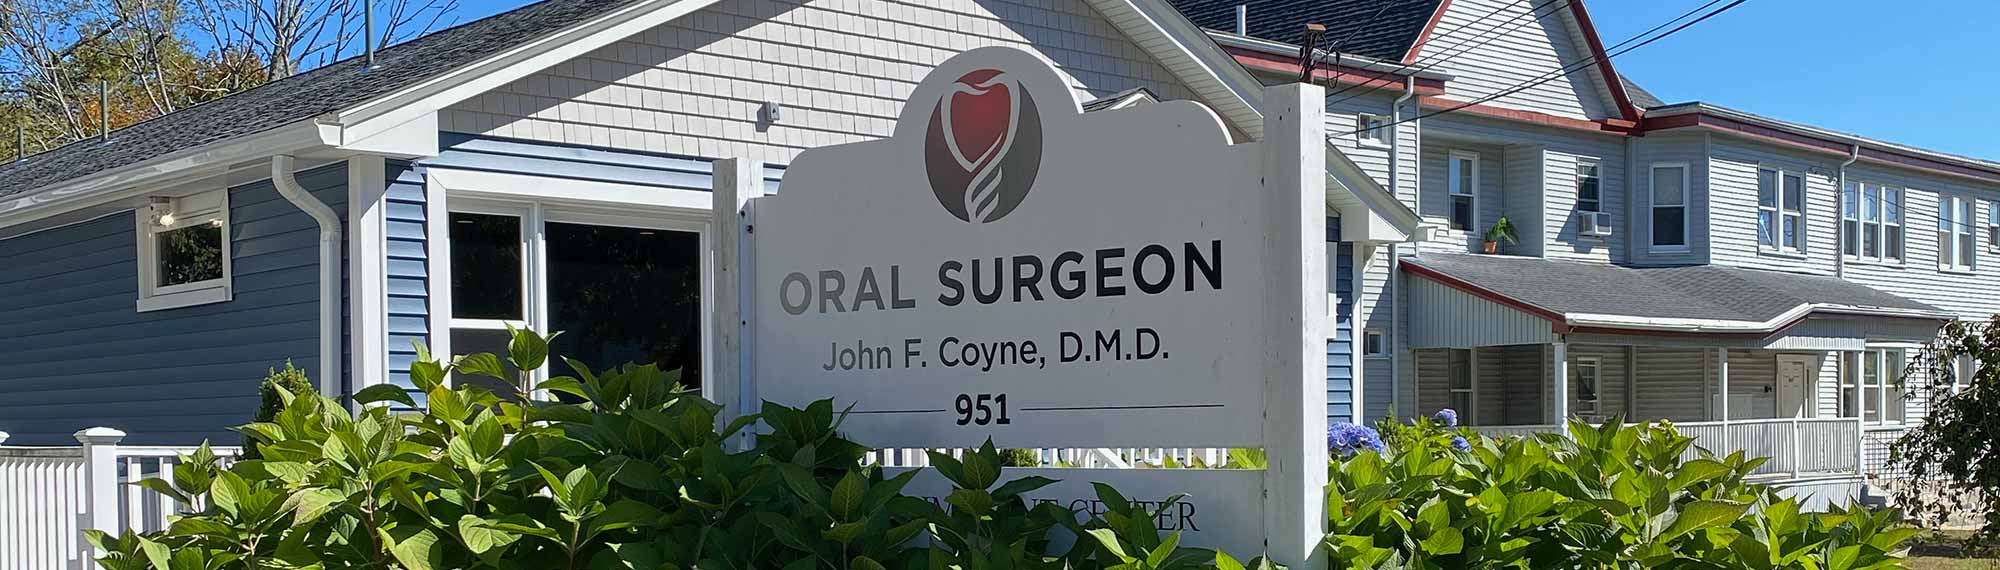 Oral Surgeon Brockton, MA